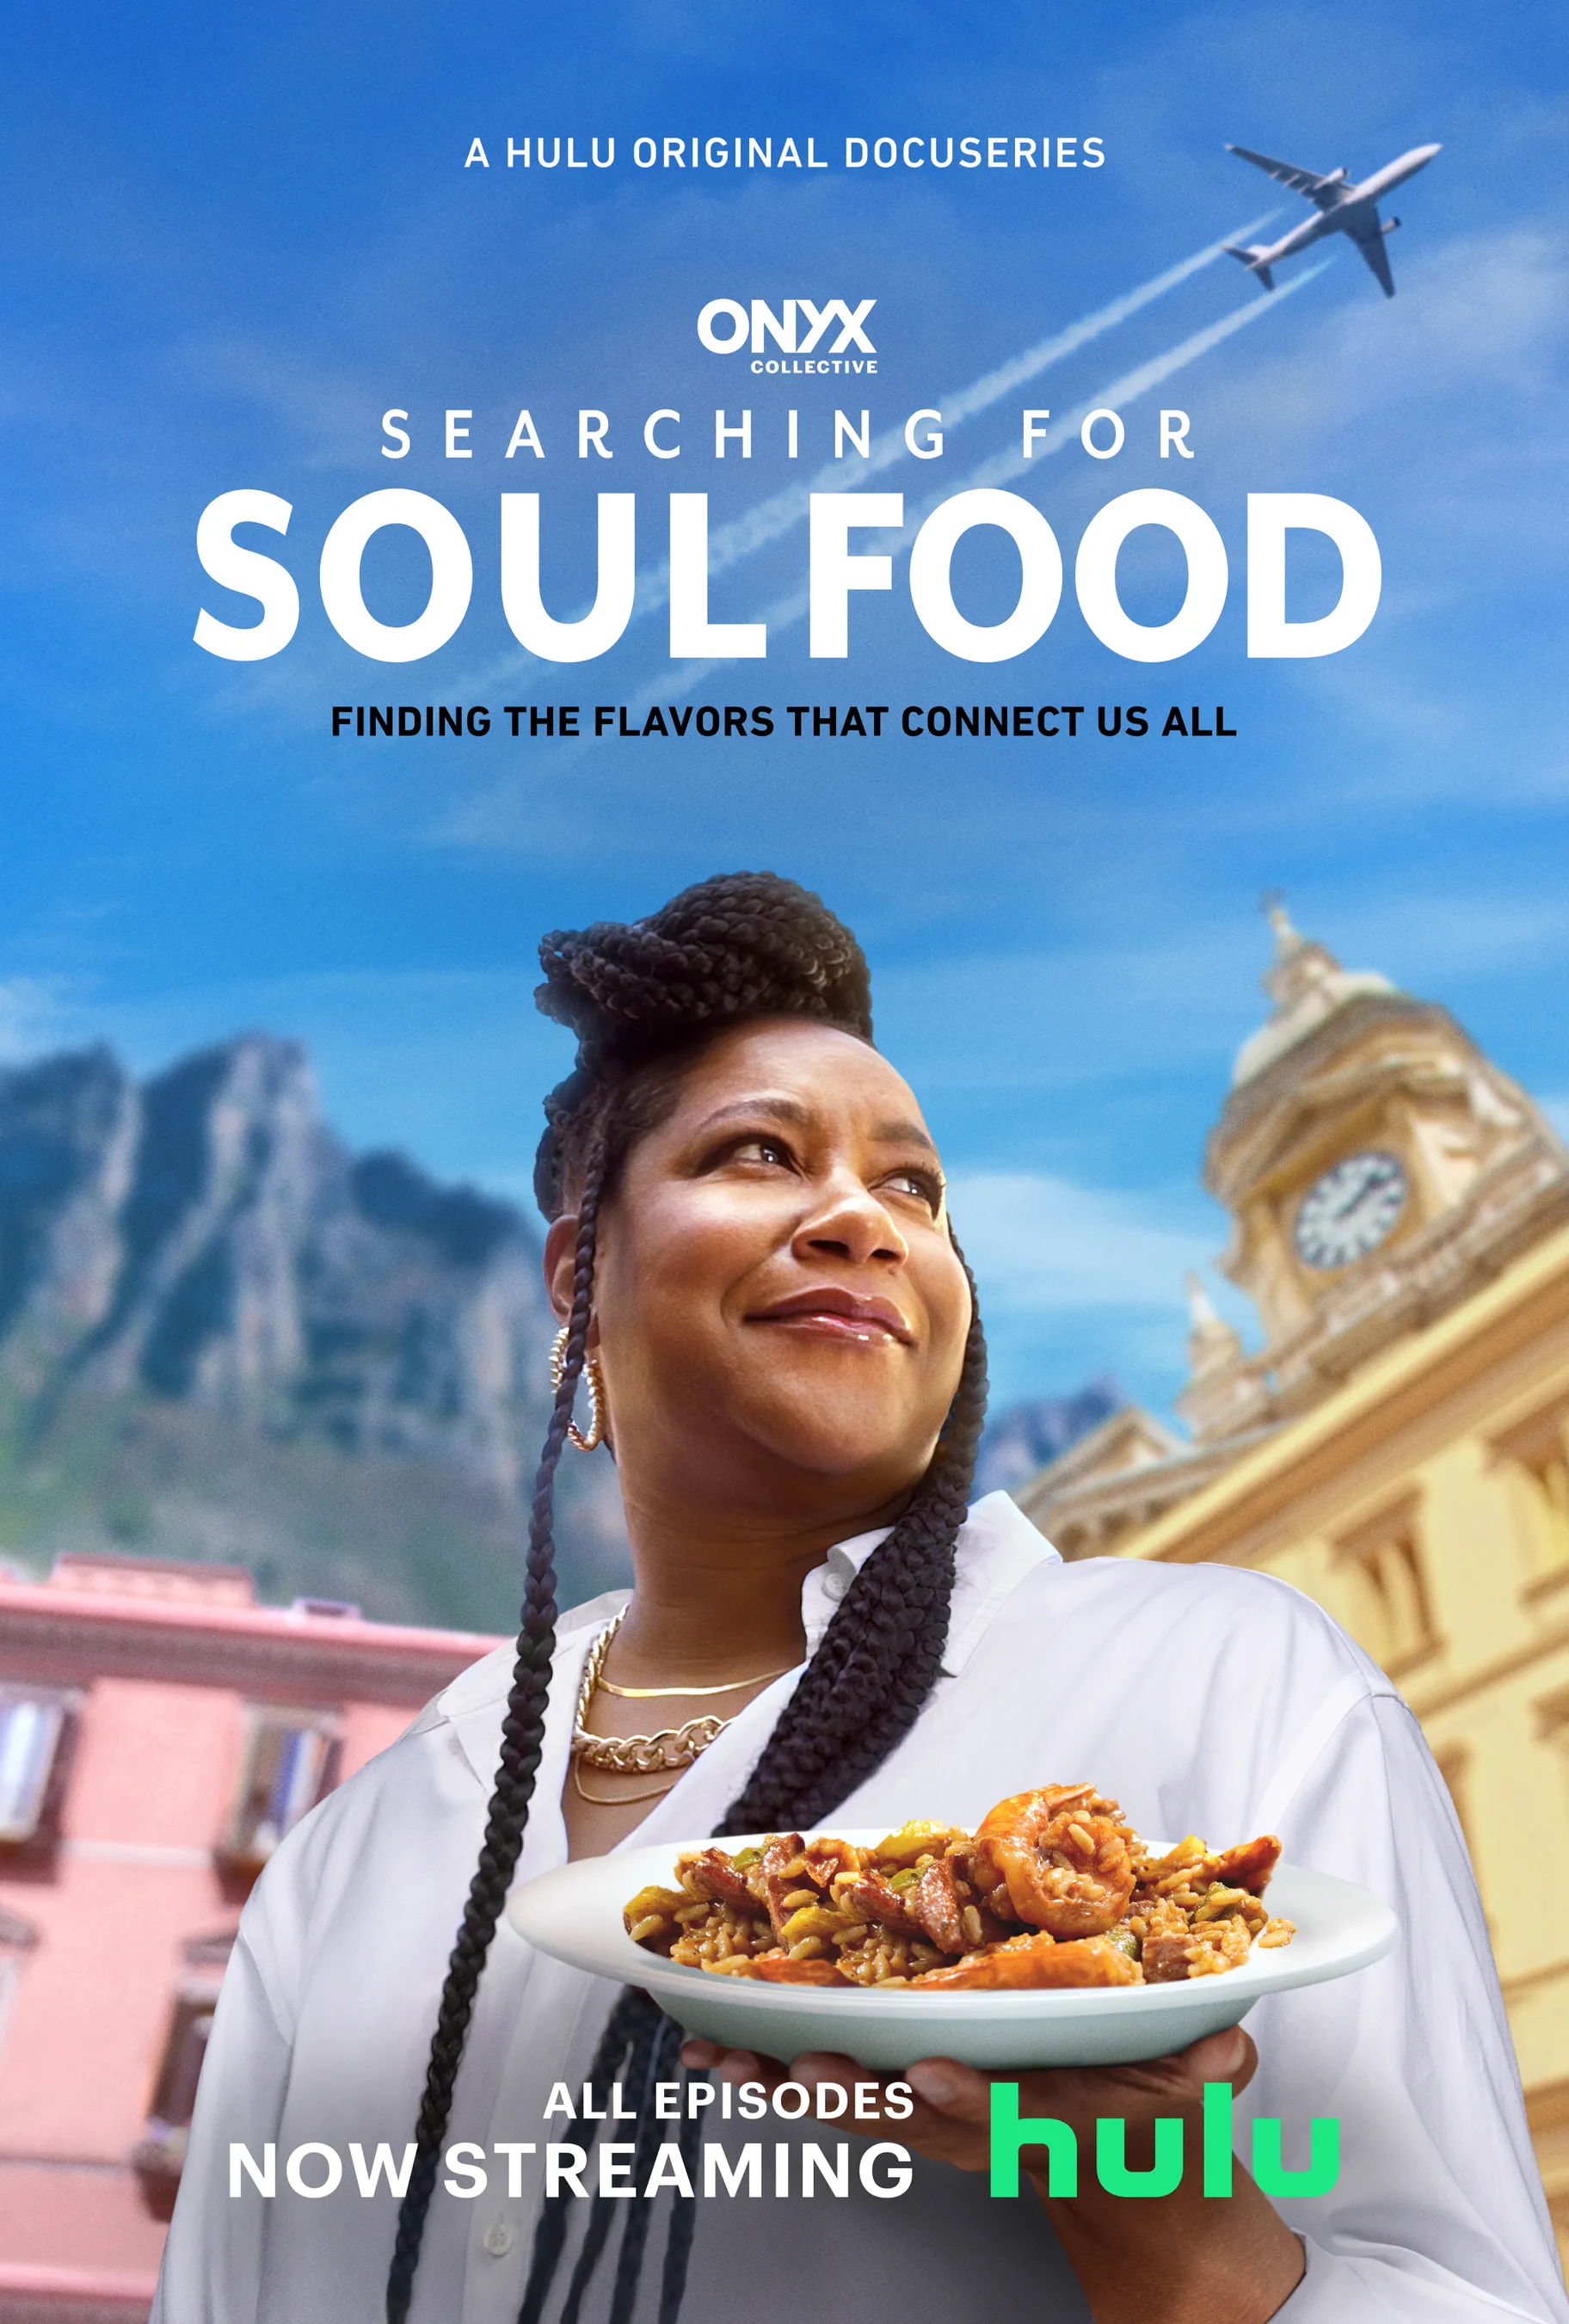 Soul Food Seasoning Guide by The Soul Food Pot – Shaunda Necole